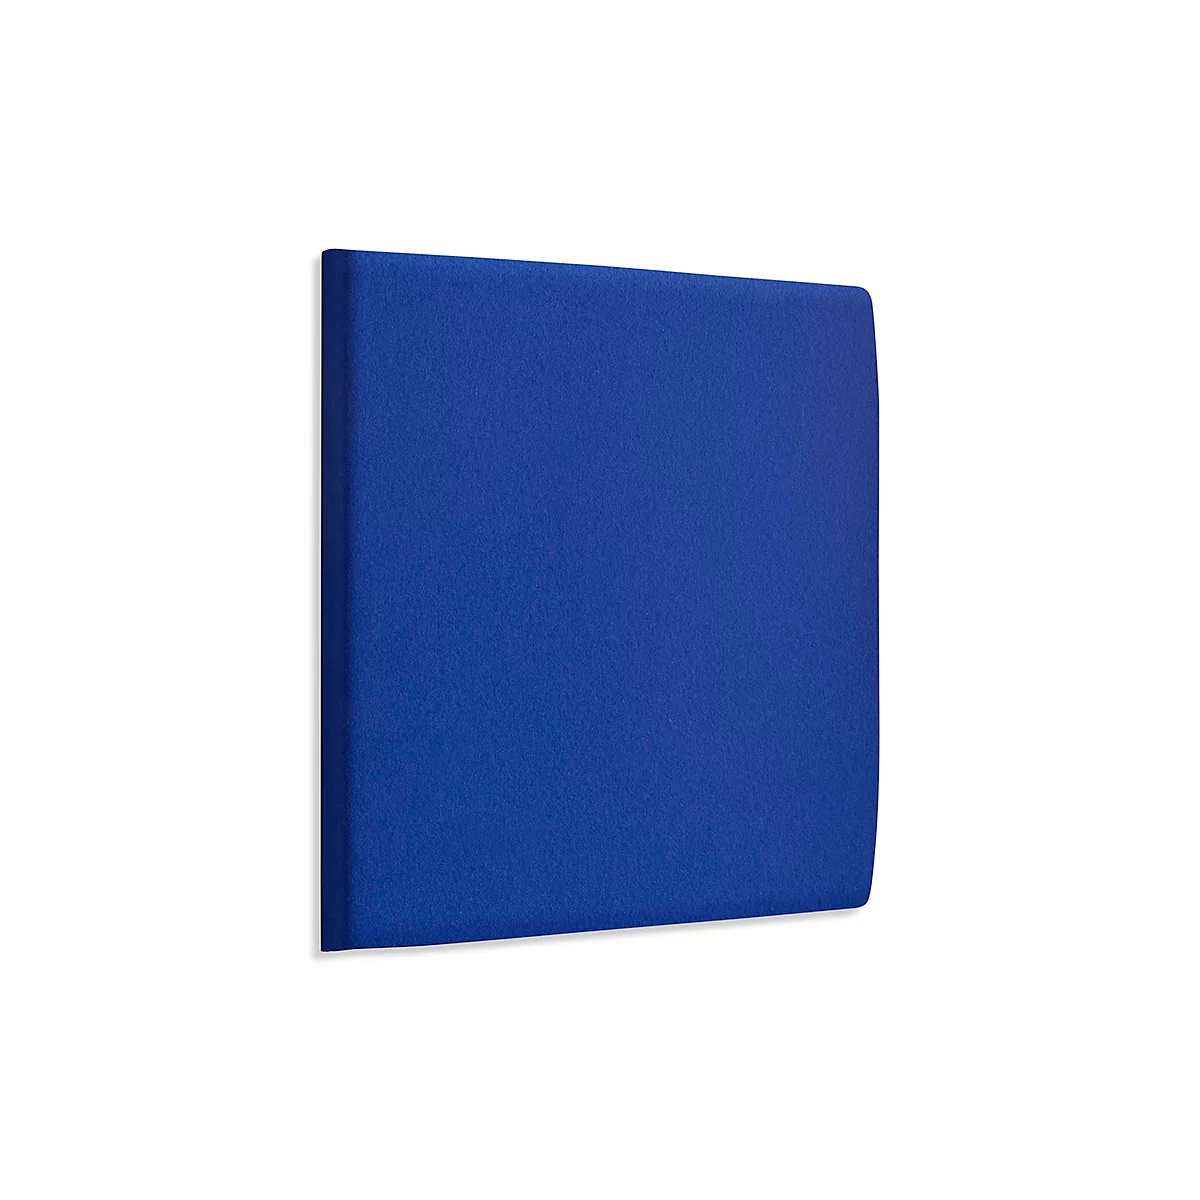 Wandpaneele m. Magnetbefestigung, B 604 x T 604 x H 47 mm, glatte Oberfläche, azurblau